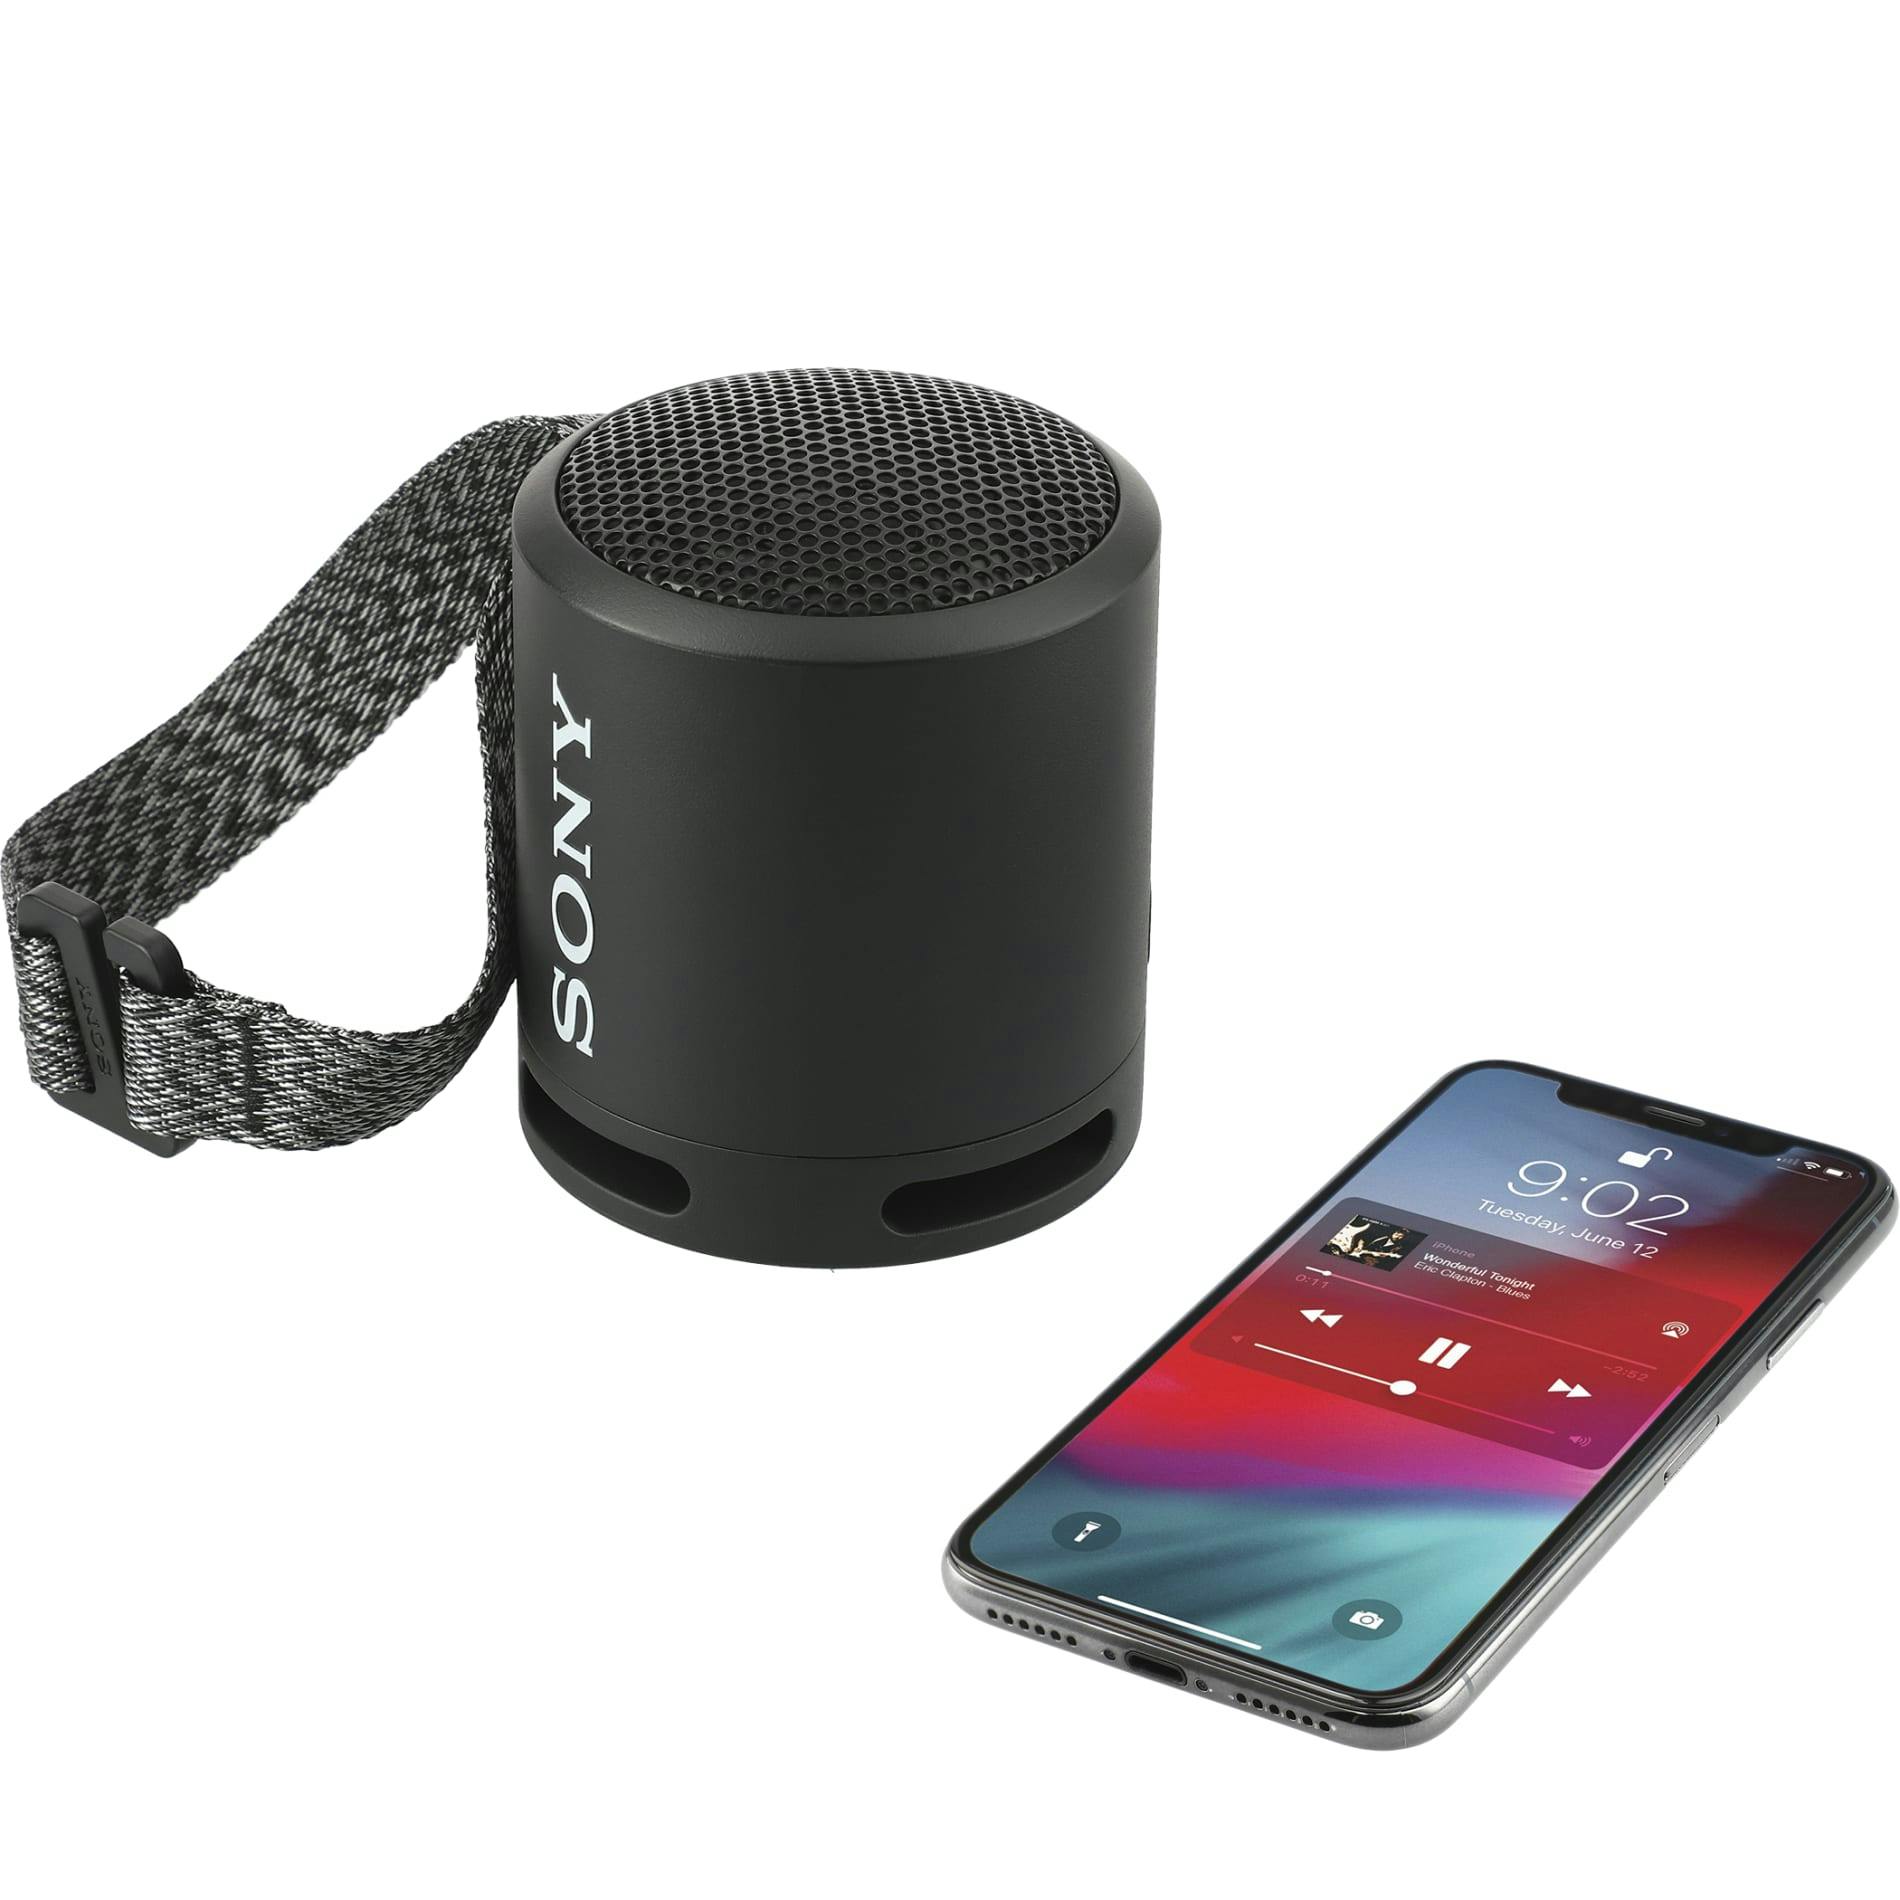 Sony SRS-XB13 Bluetooth Speaker - additional Image 2